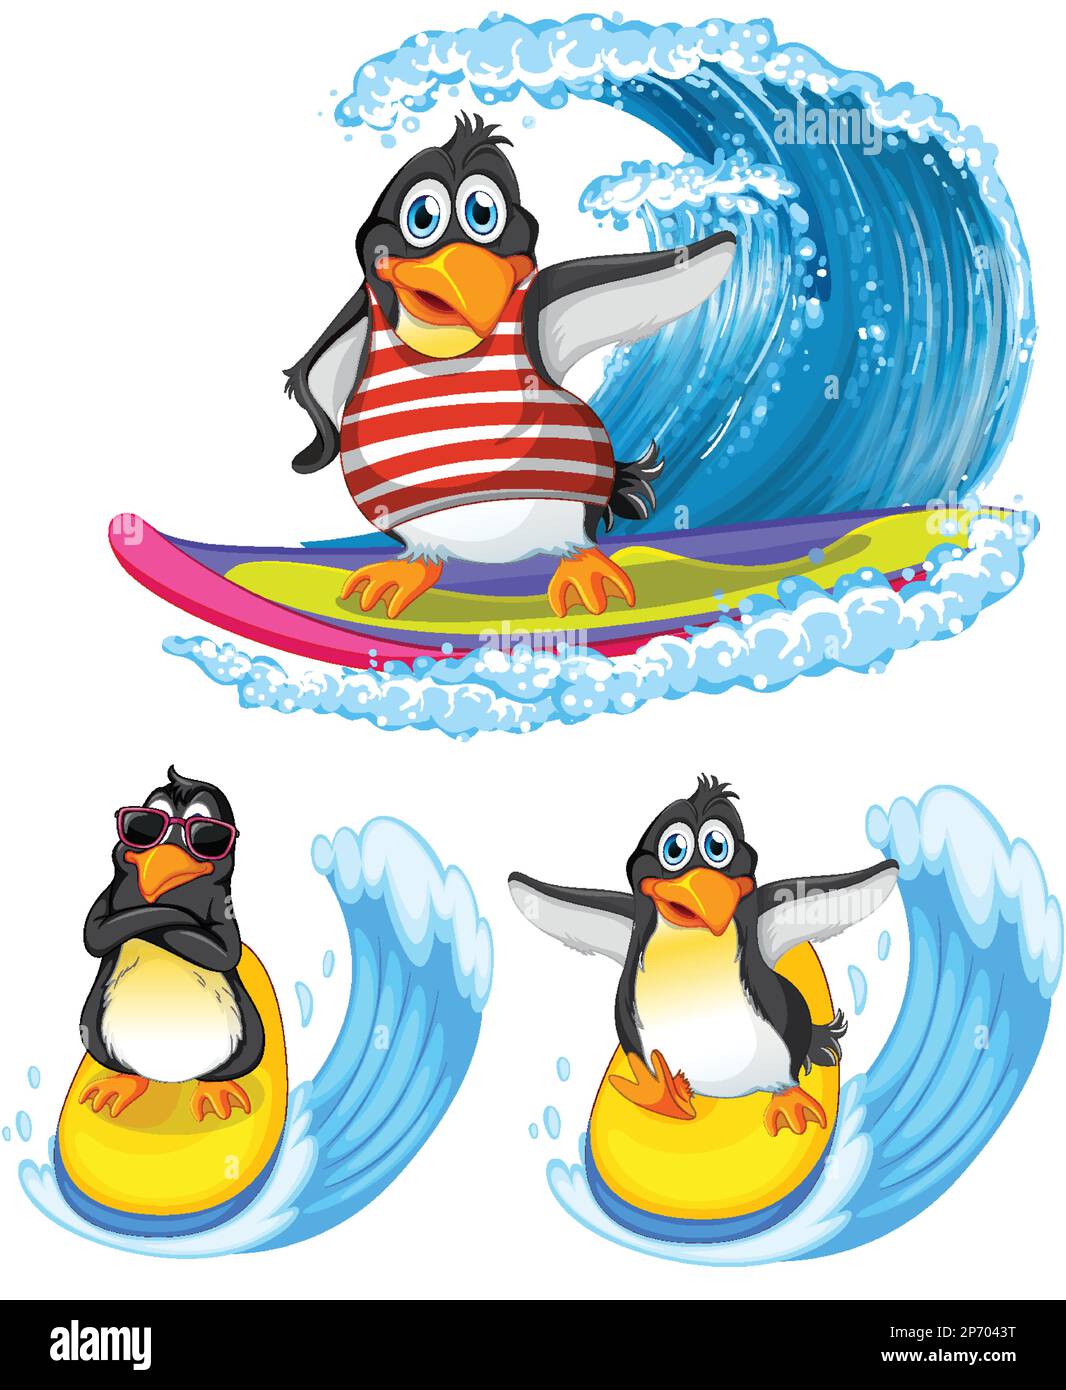 Penguin Cartoon Characters in Summer Theme illustration Stock Vector ...